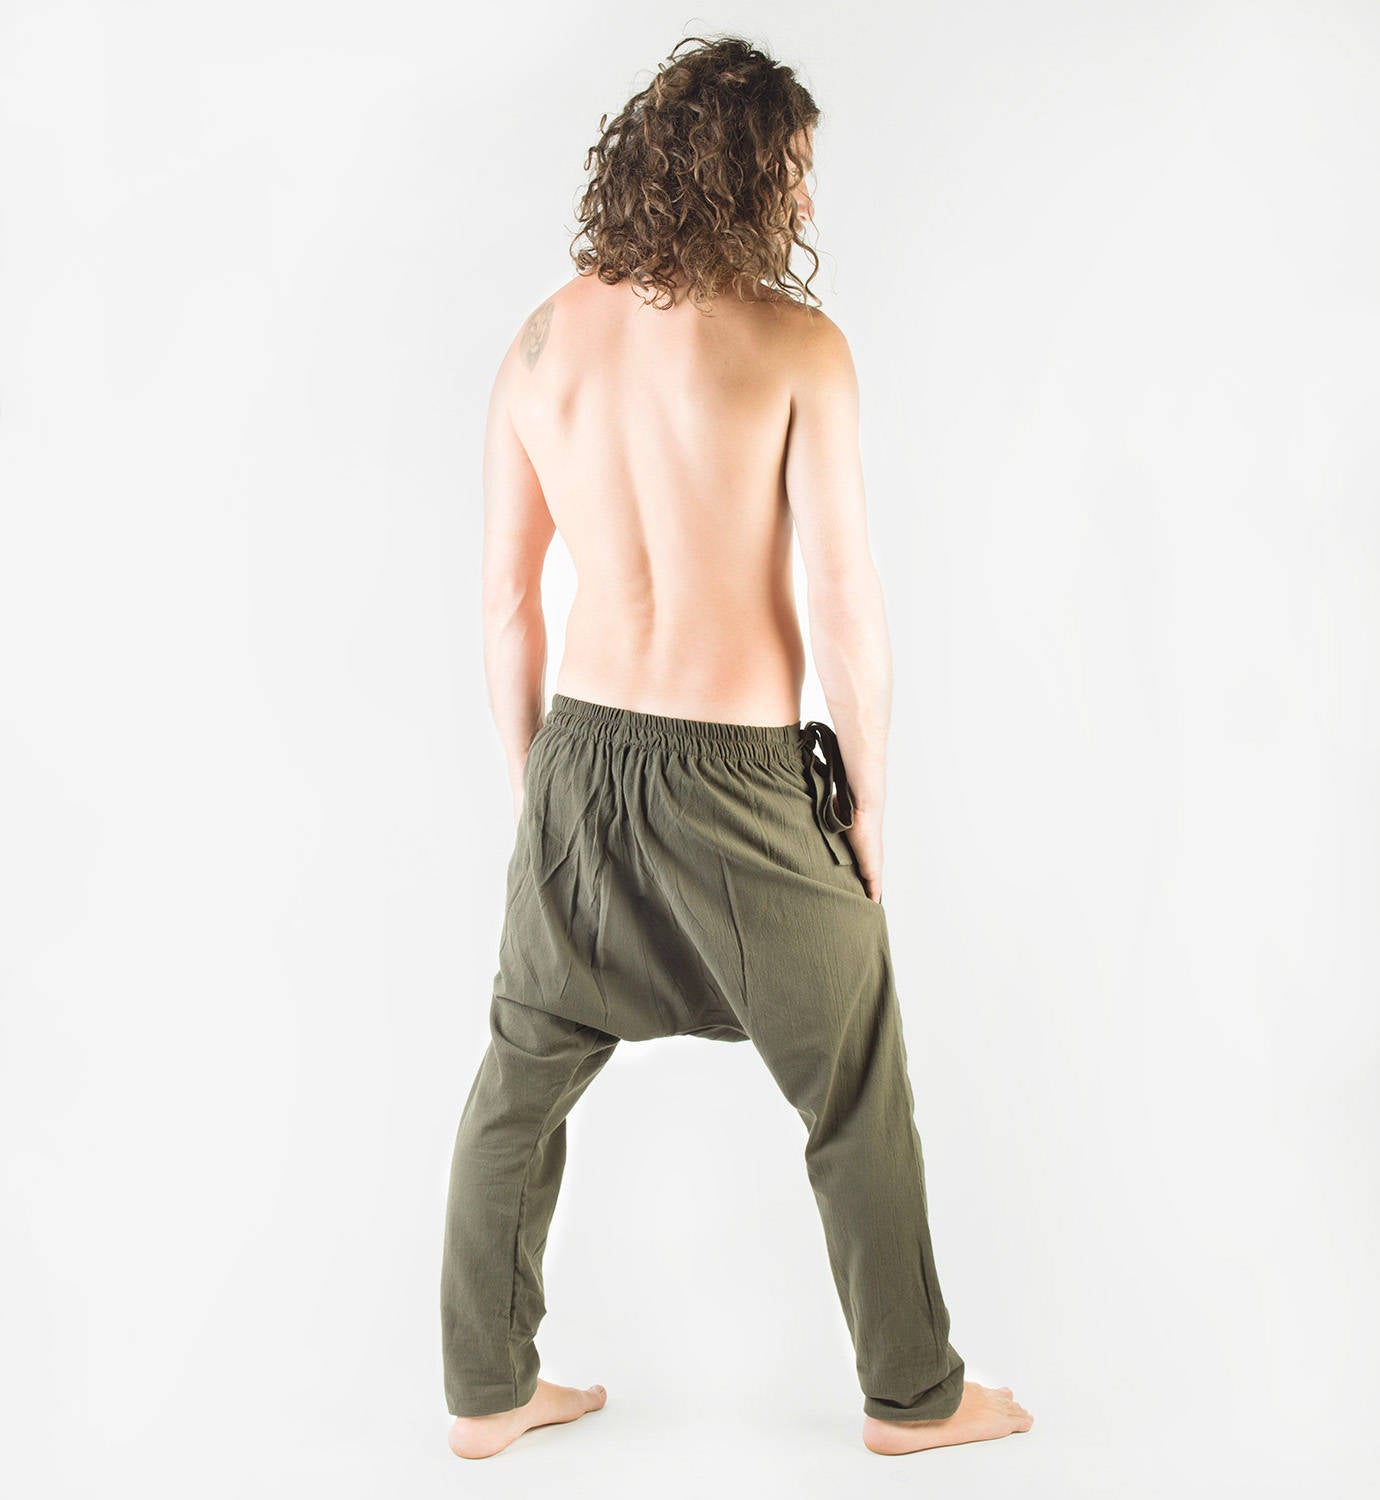 Pantalones bombachos para hombre verde Afghani Drop Crotch, primitivo hecho a mano cómodo Yoga Gypsy Boho Alibaba Aladdin Festival Goa dos bolsillos AJJAYA